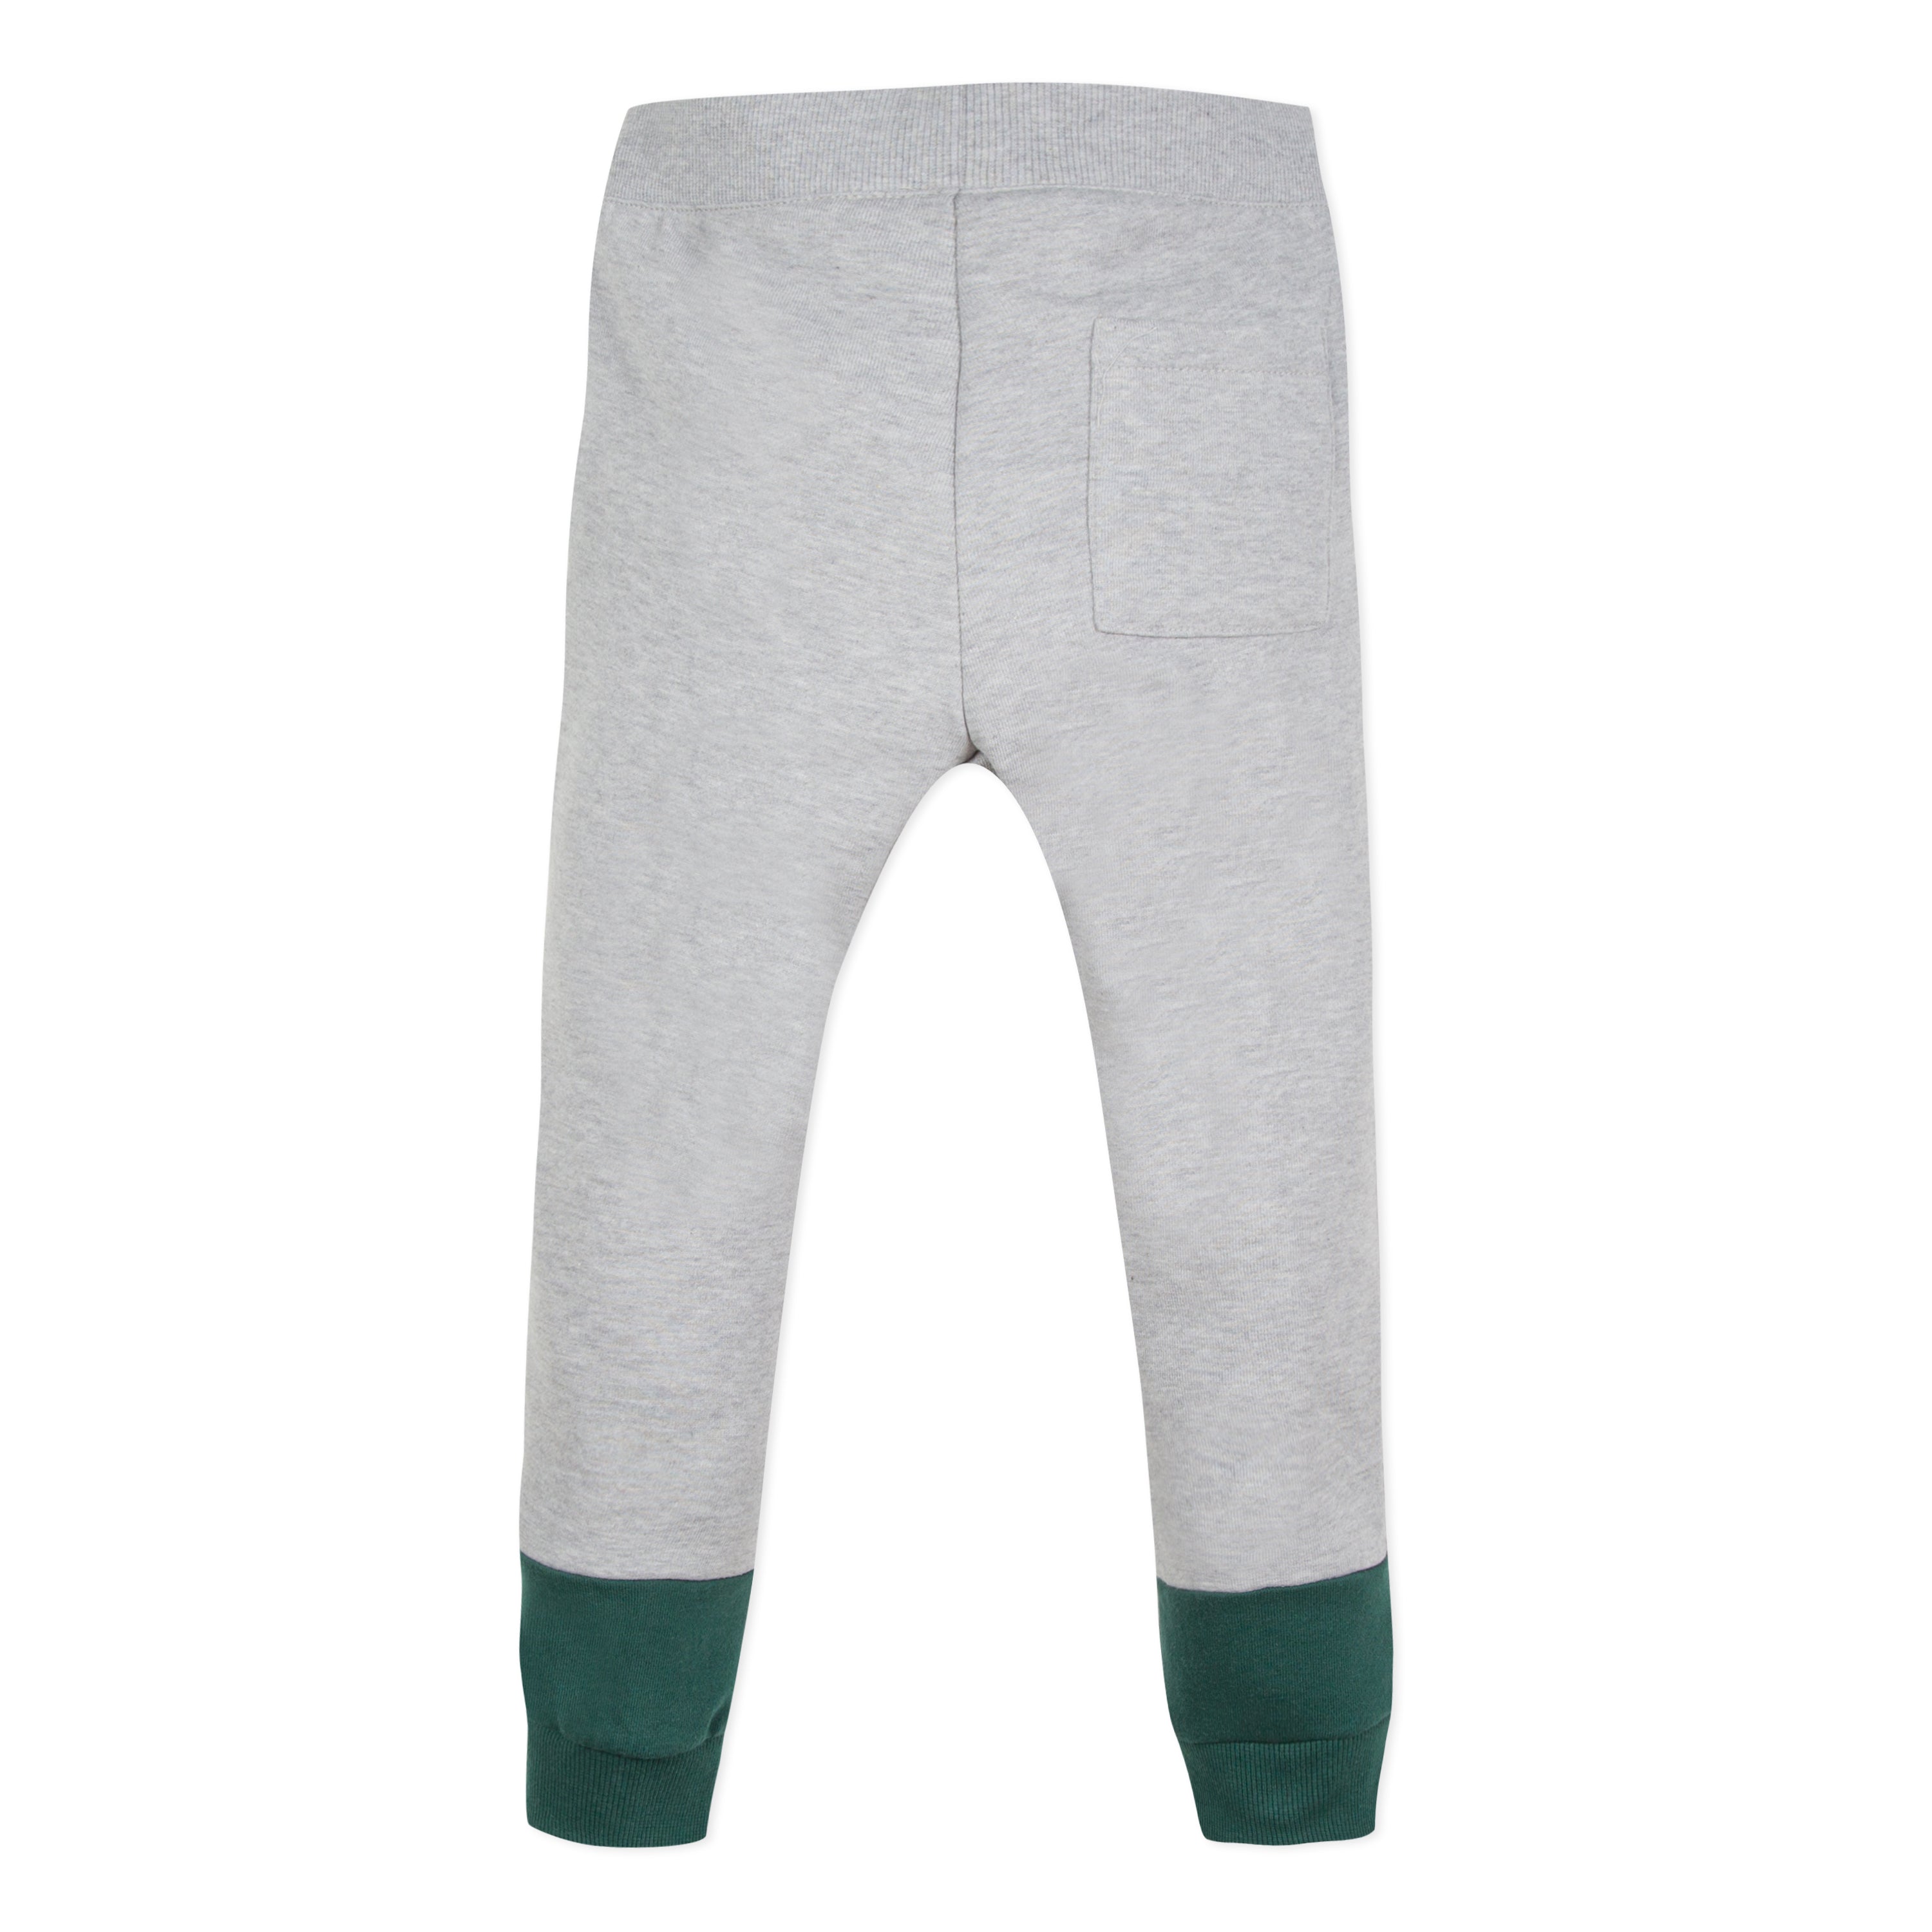 Boys Grey & Green Drawstring Cotton Trousers